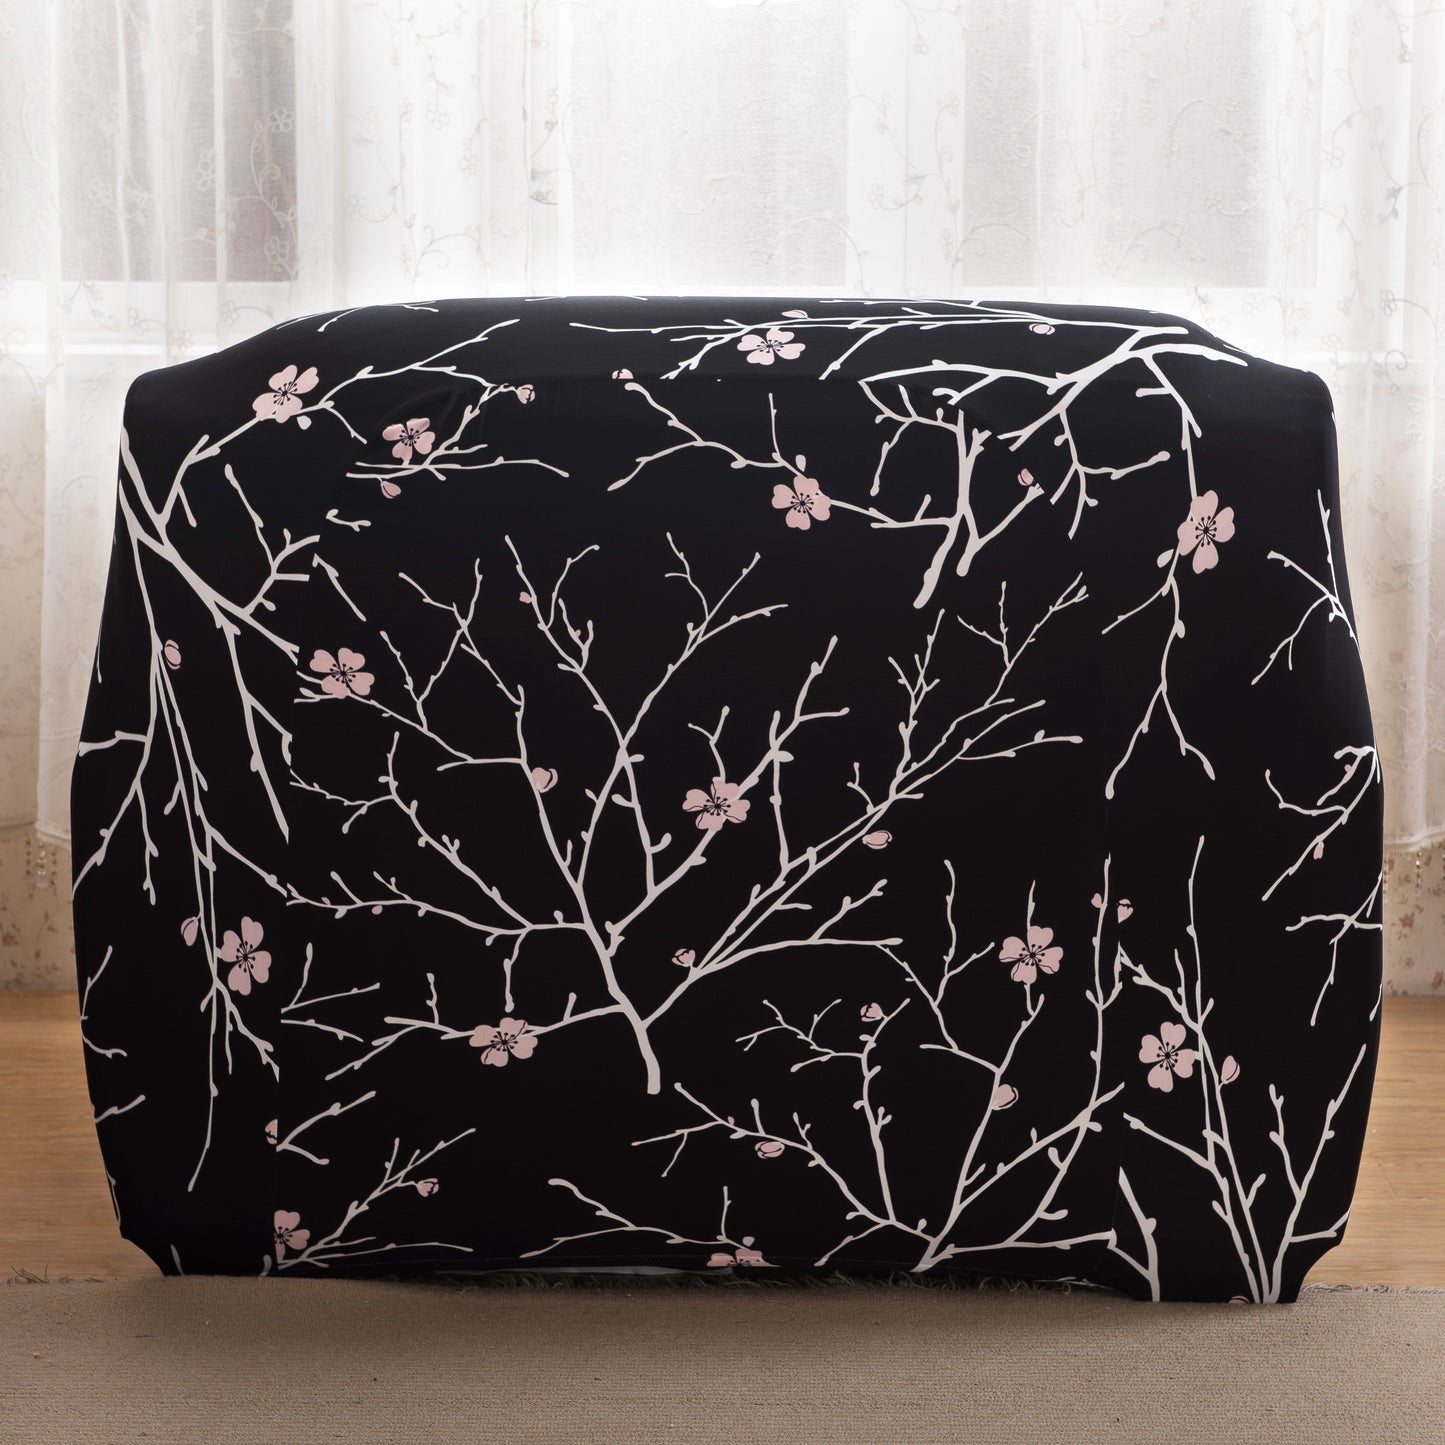 Printed Sofa Cover - Black Branch